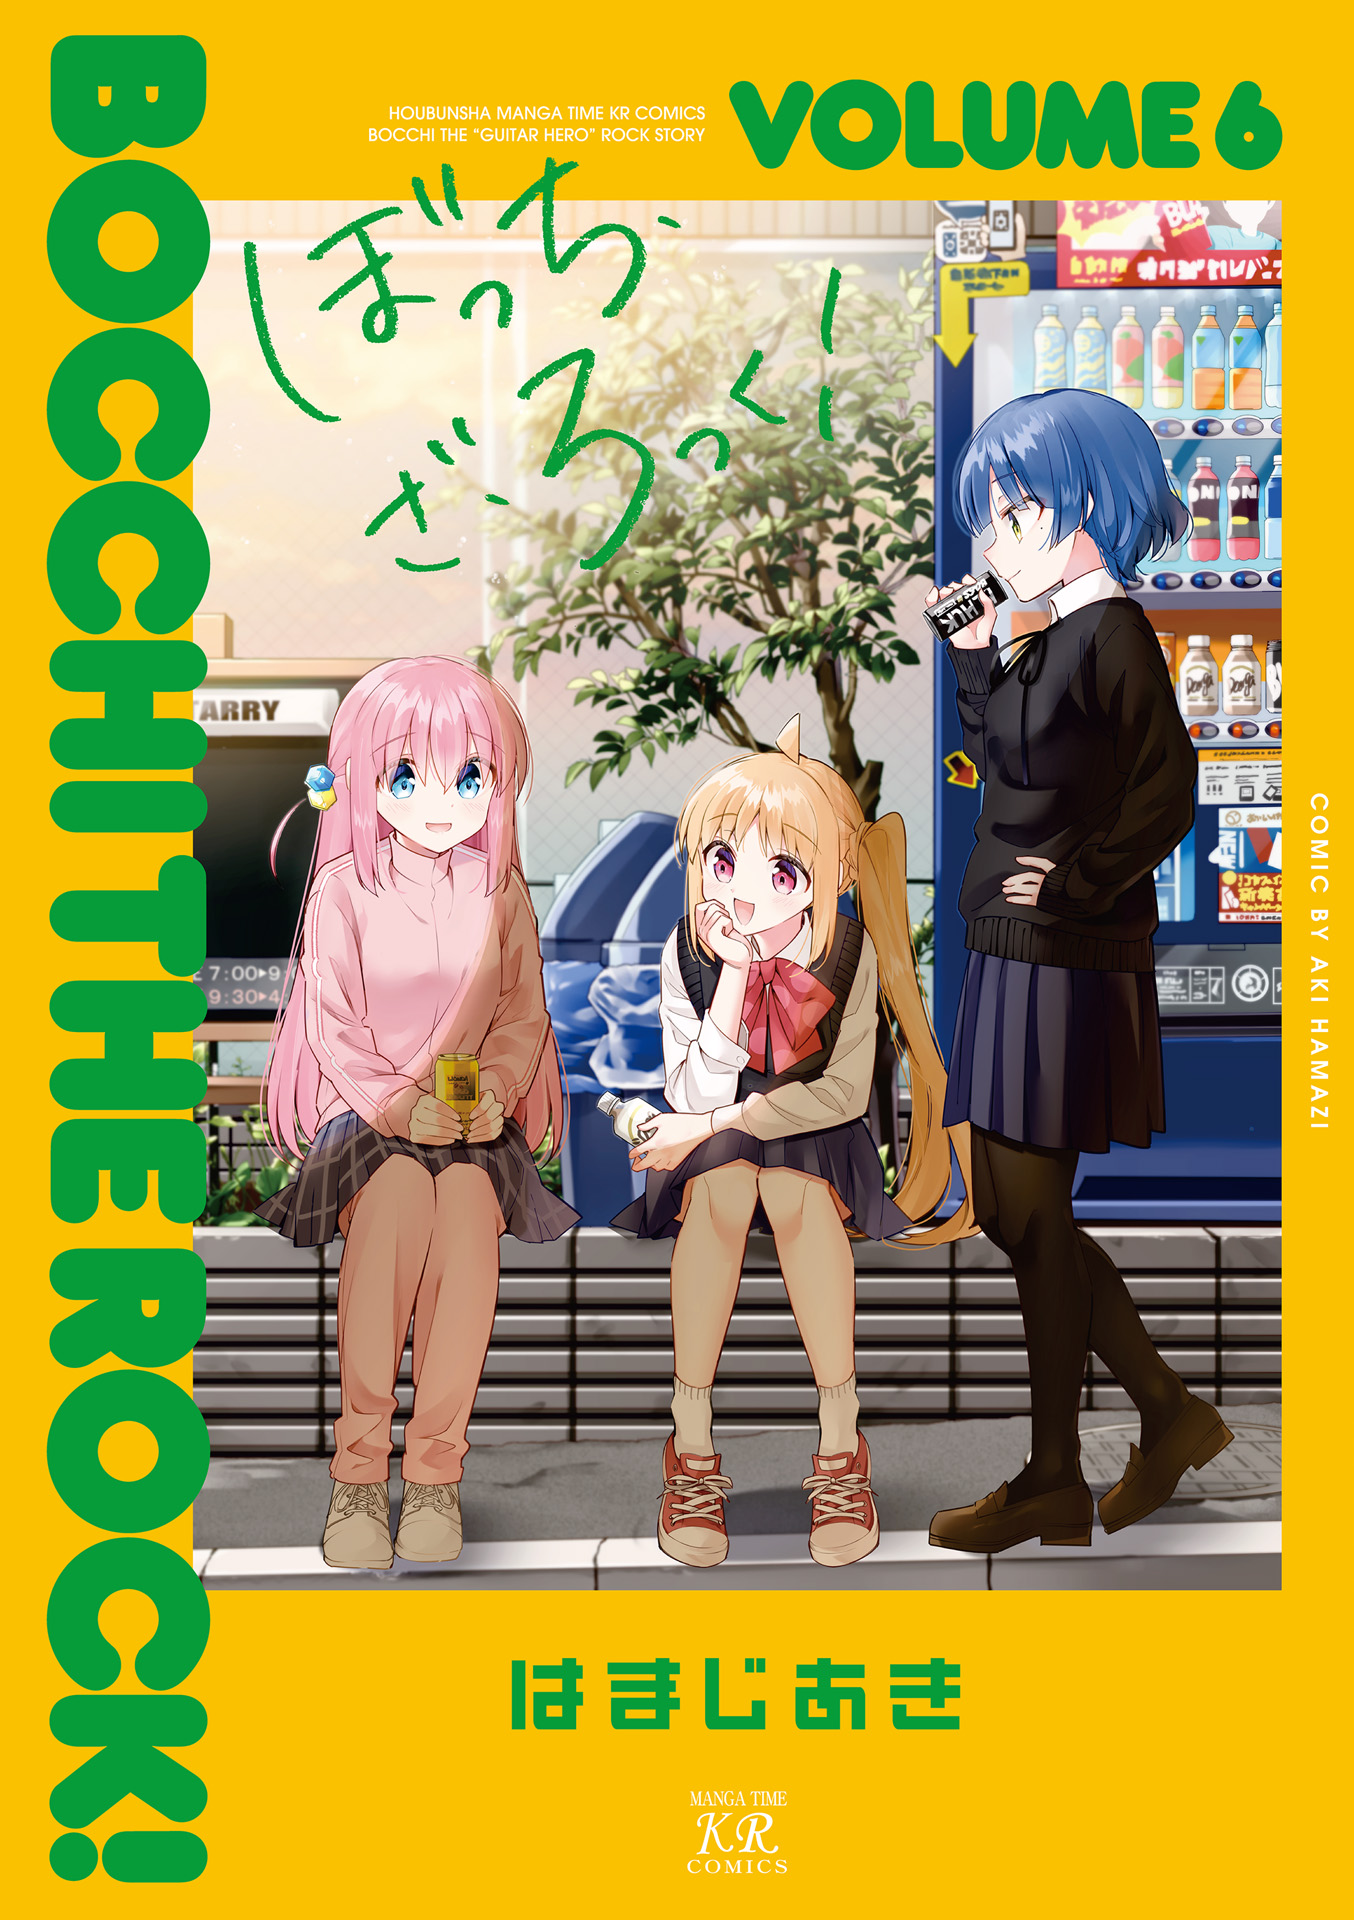 Bocchi The Rock Chapter 2 - Bocchi The Rock Manga Online